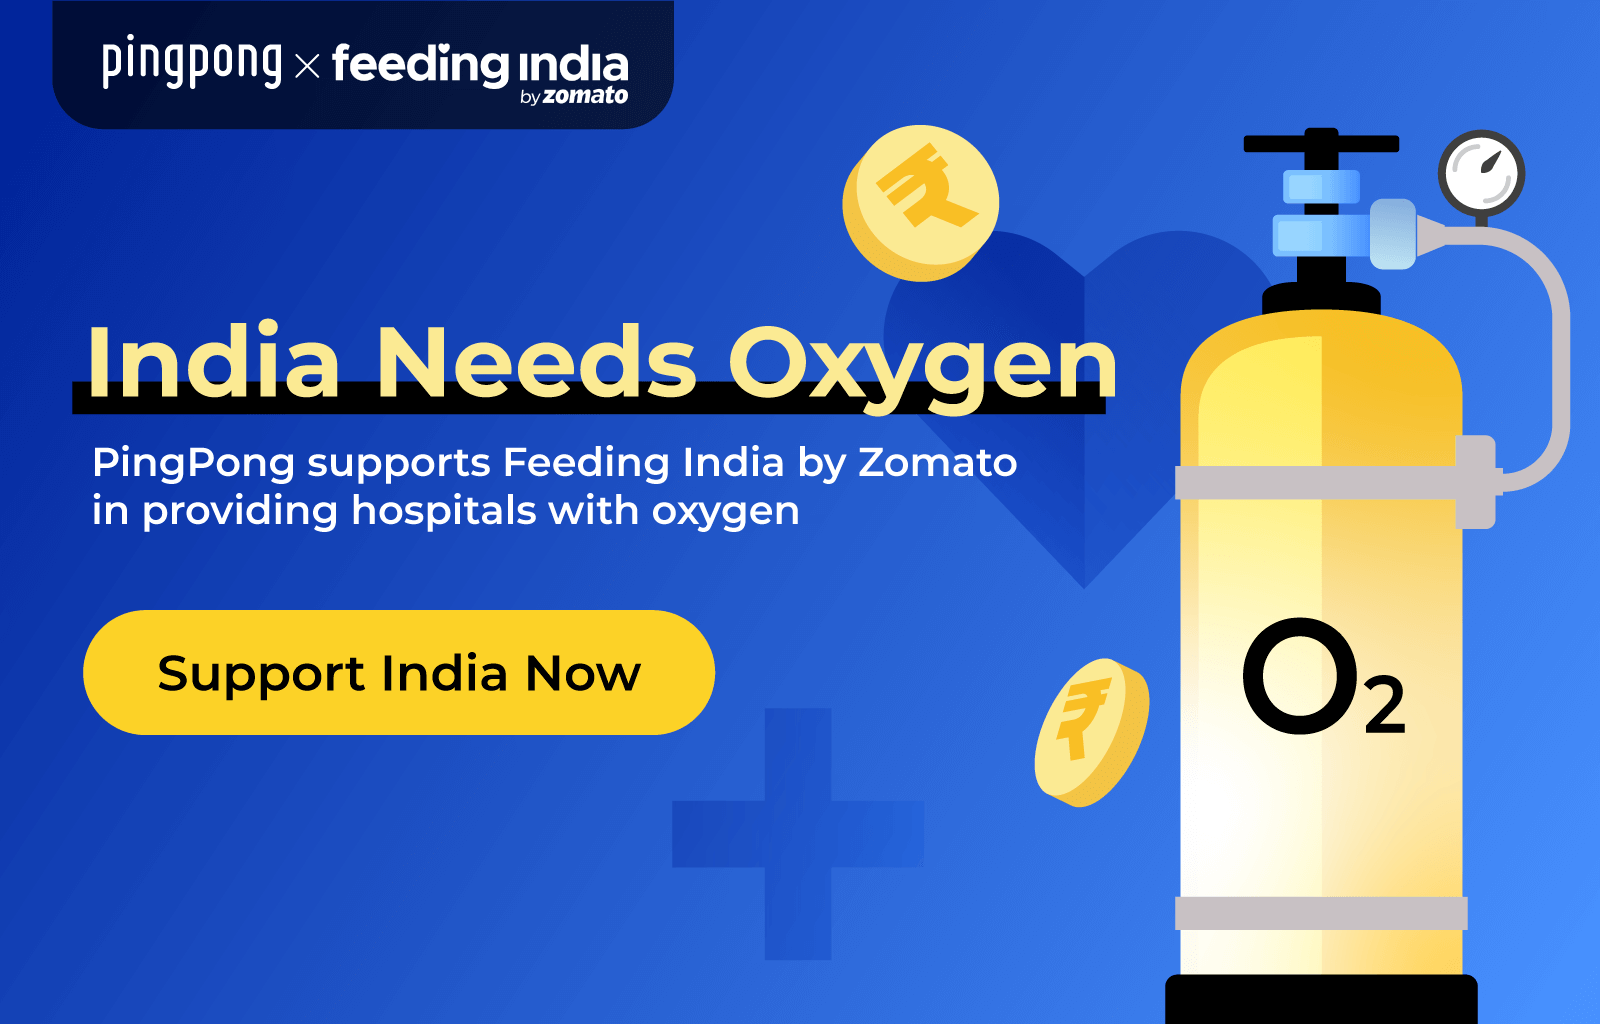 PingPong supports mission with Zomato Feeding India "India Needs Oxygen"